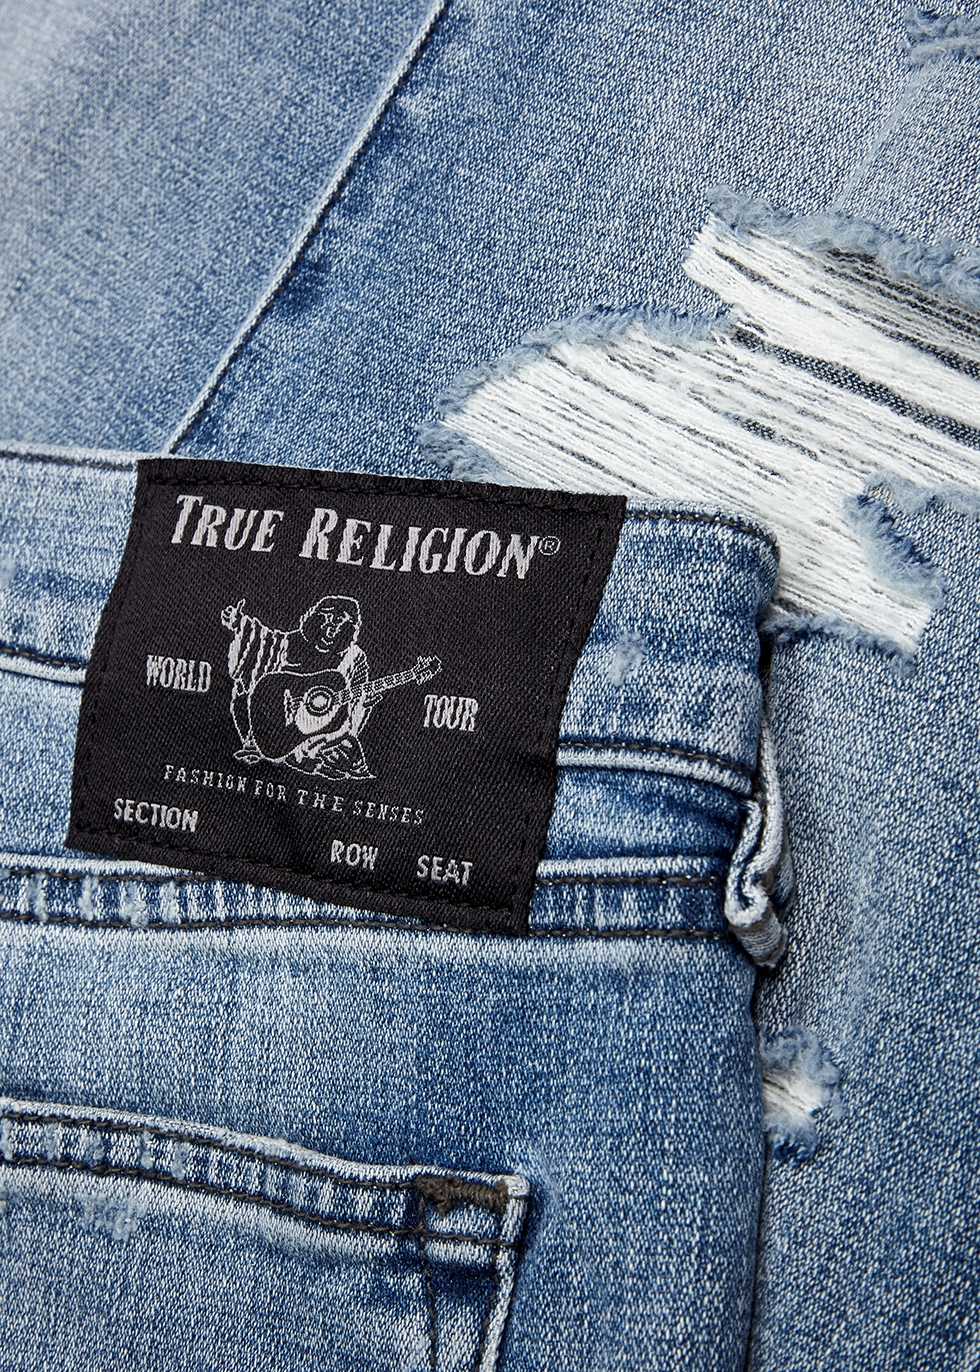 blue jeans true religion